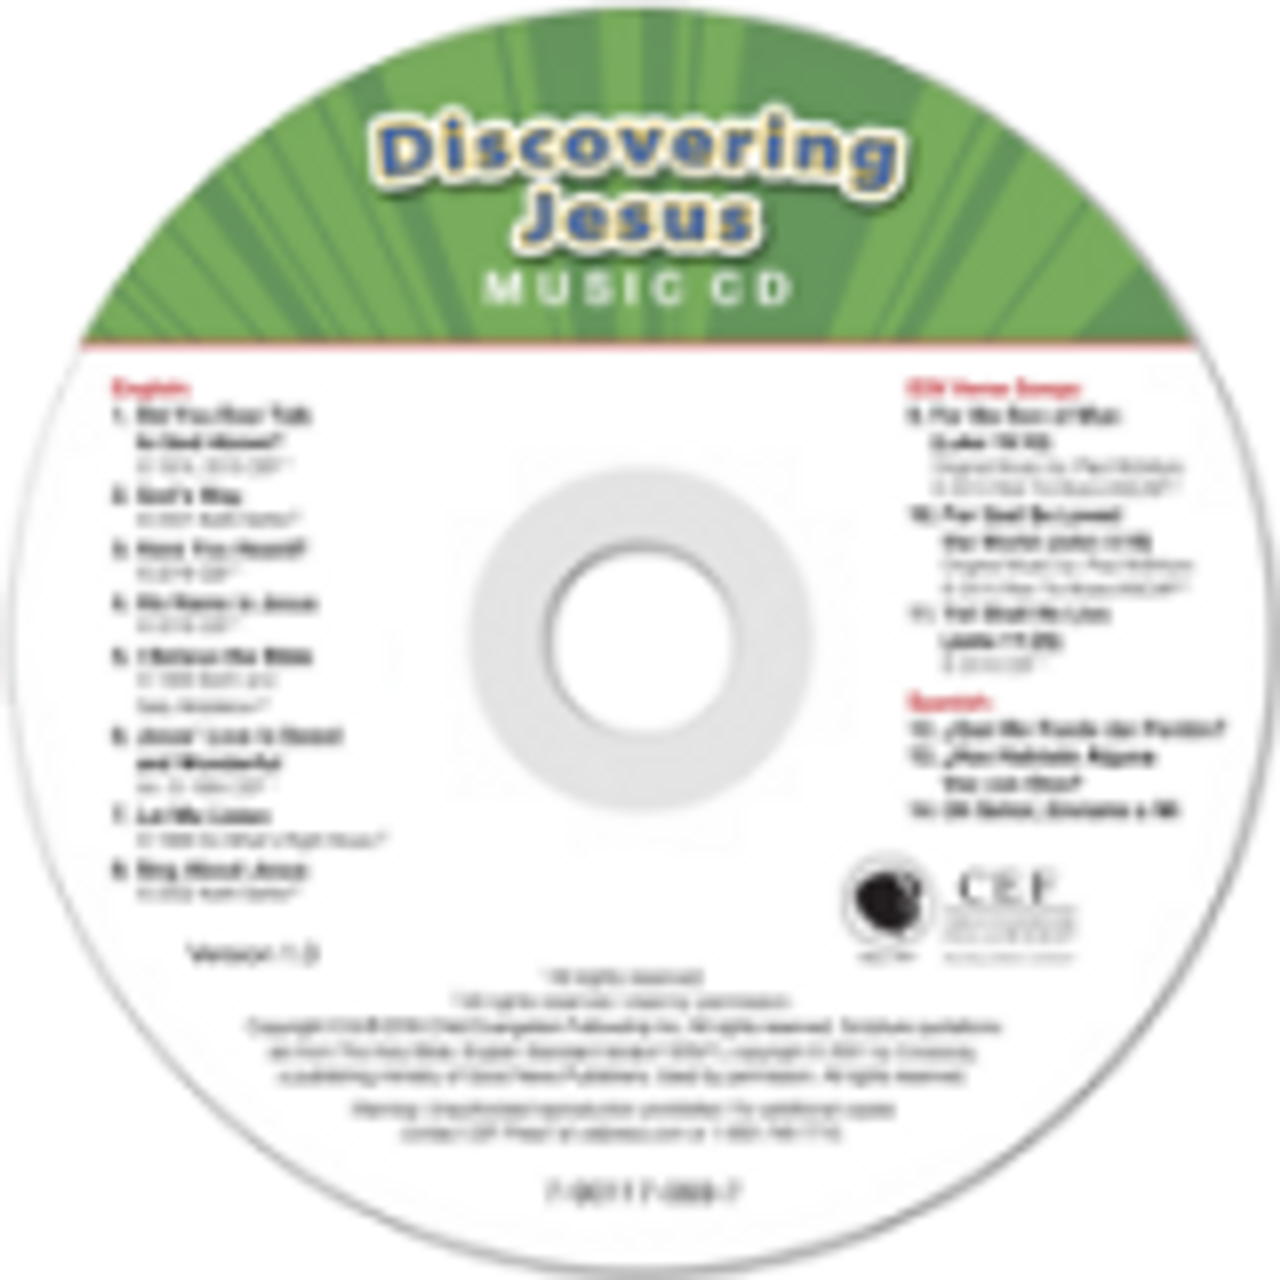 Discovering Jesus 2017 (music cd)